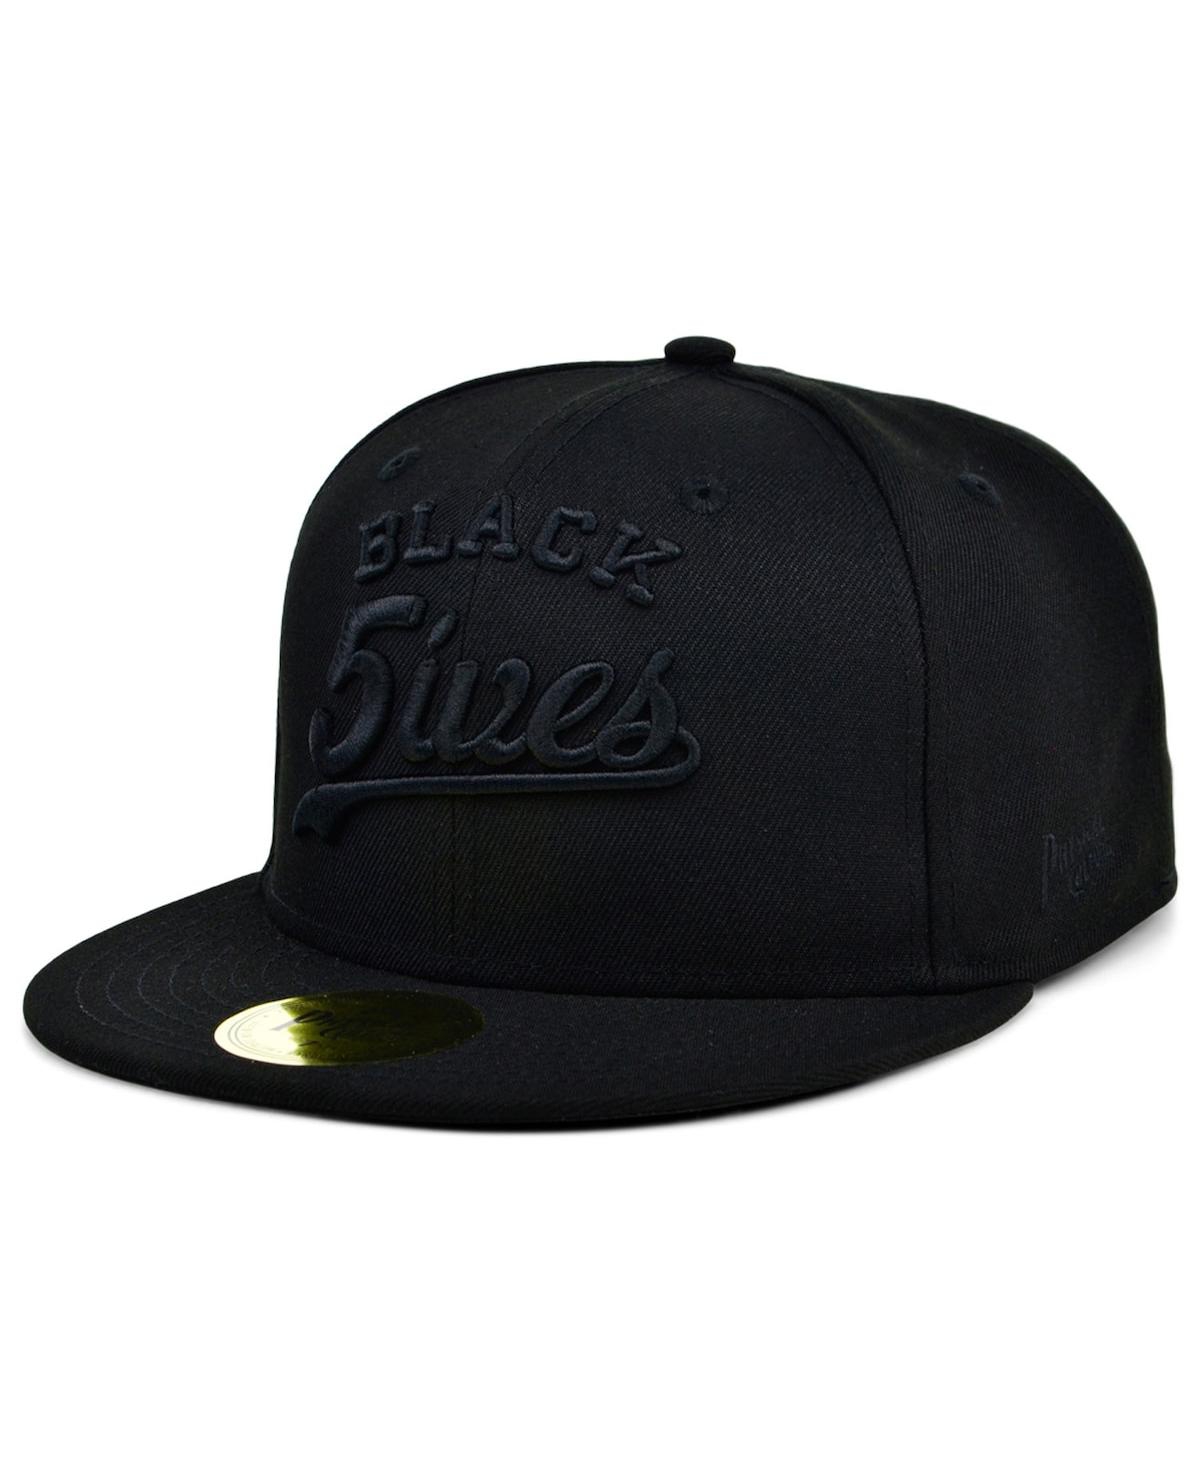 Shop Physical Culture Men's  Black Black Fives Fitted Hat